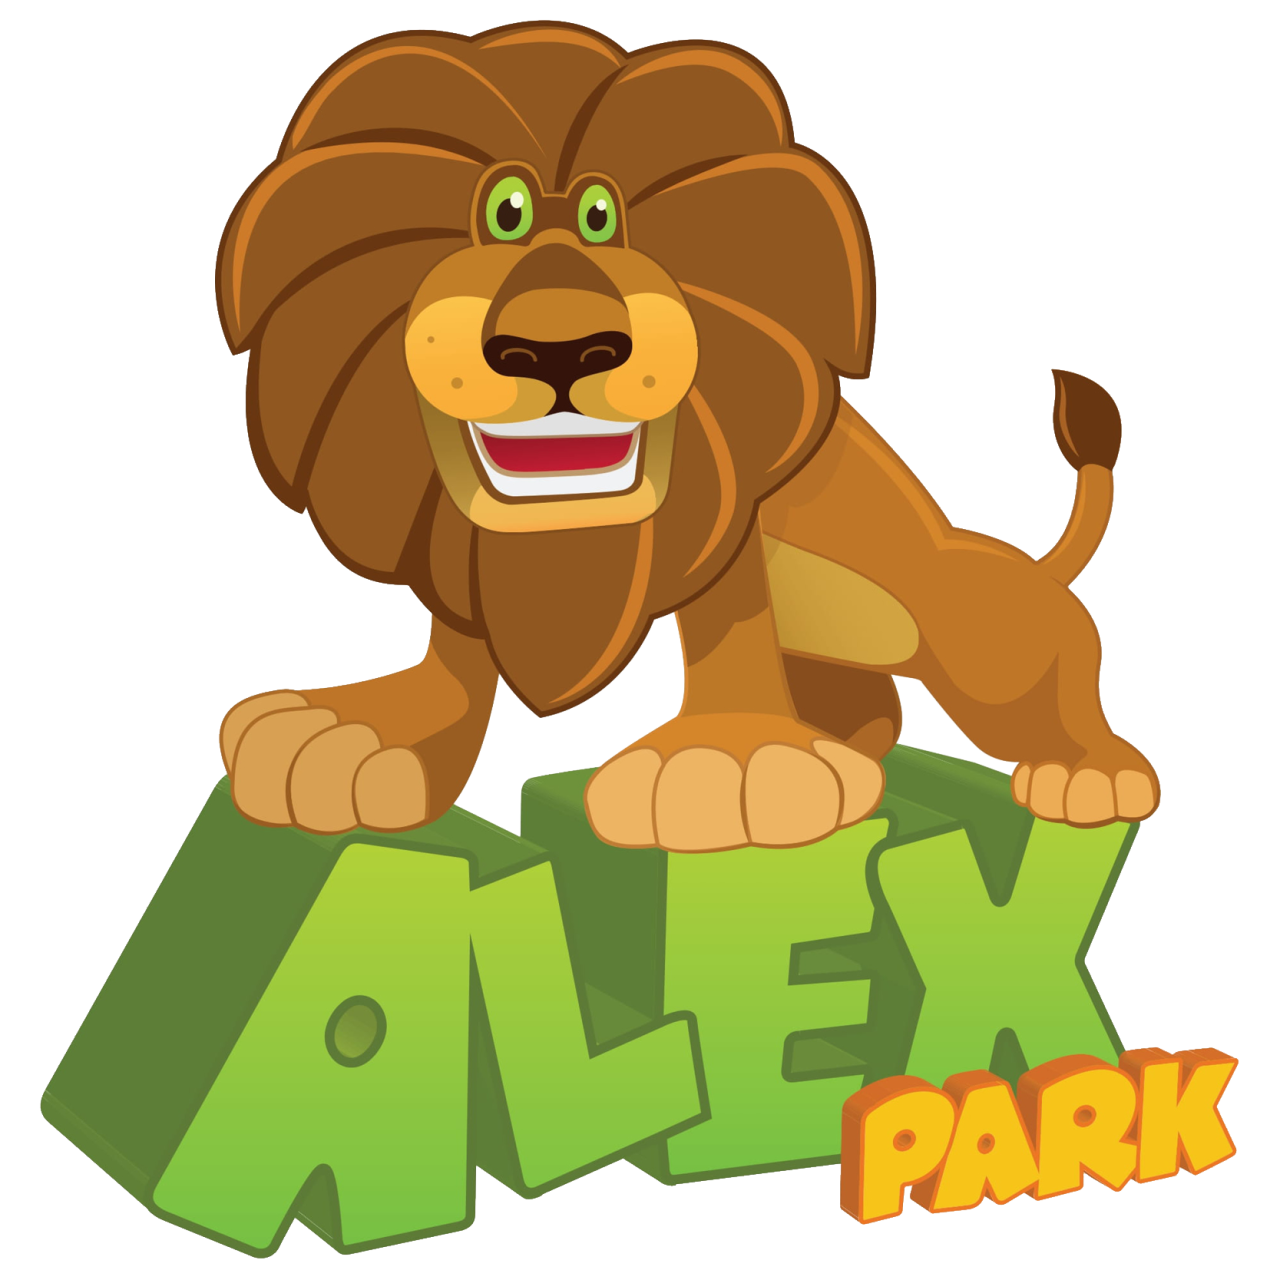 alex park